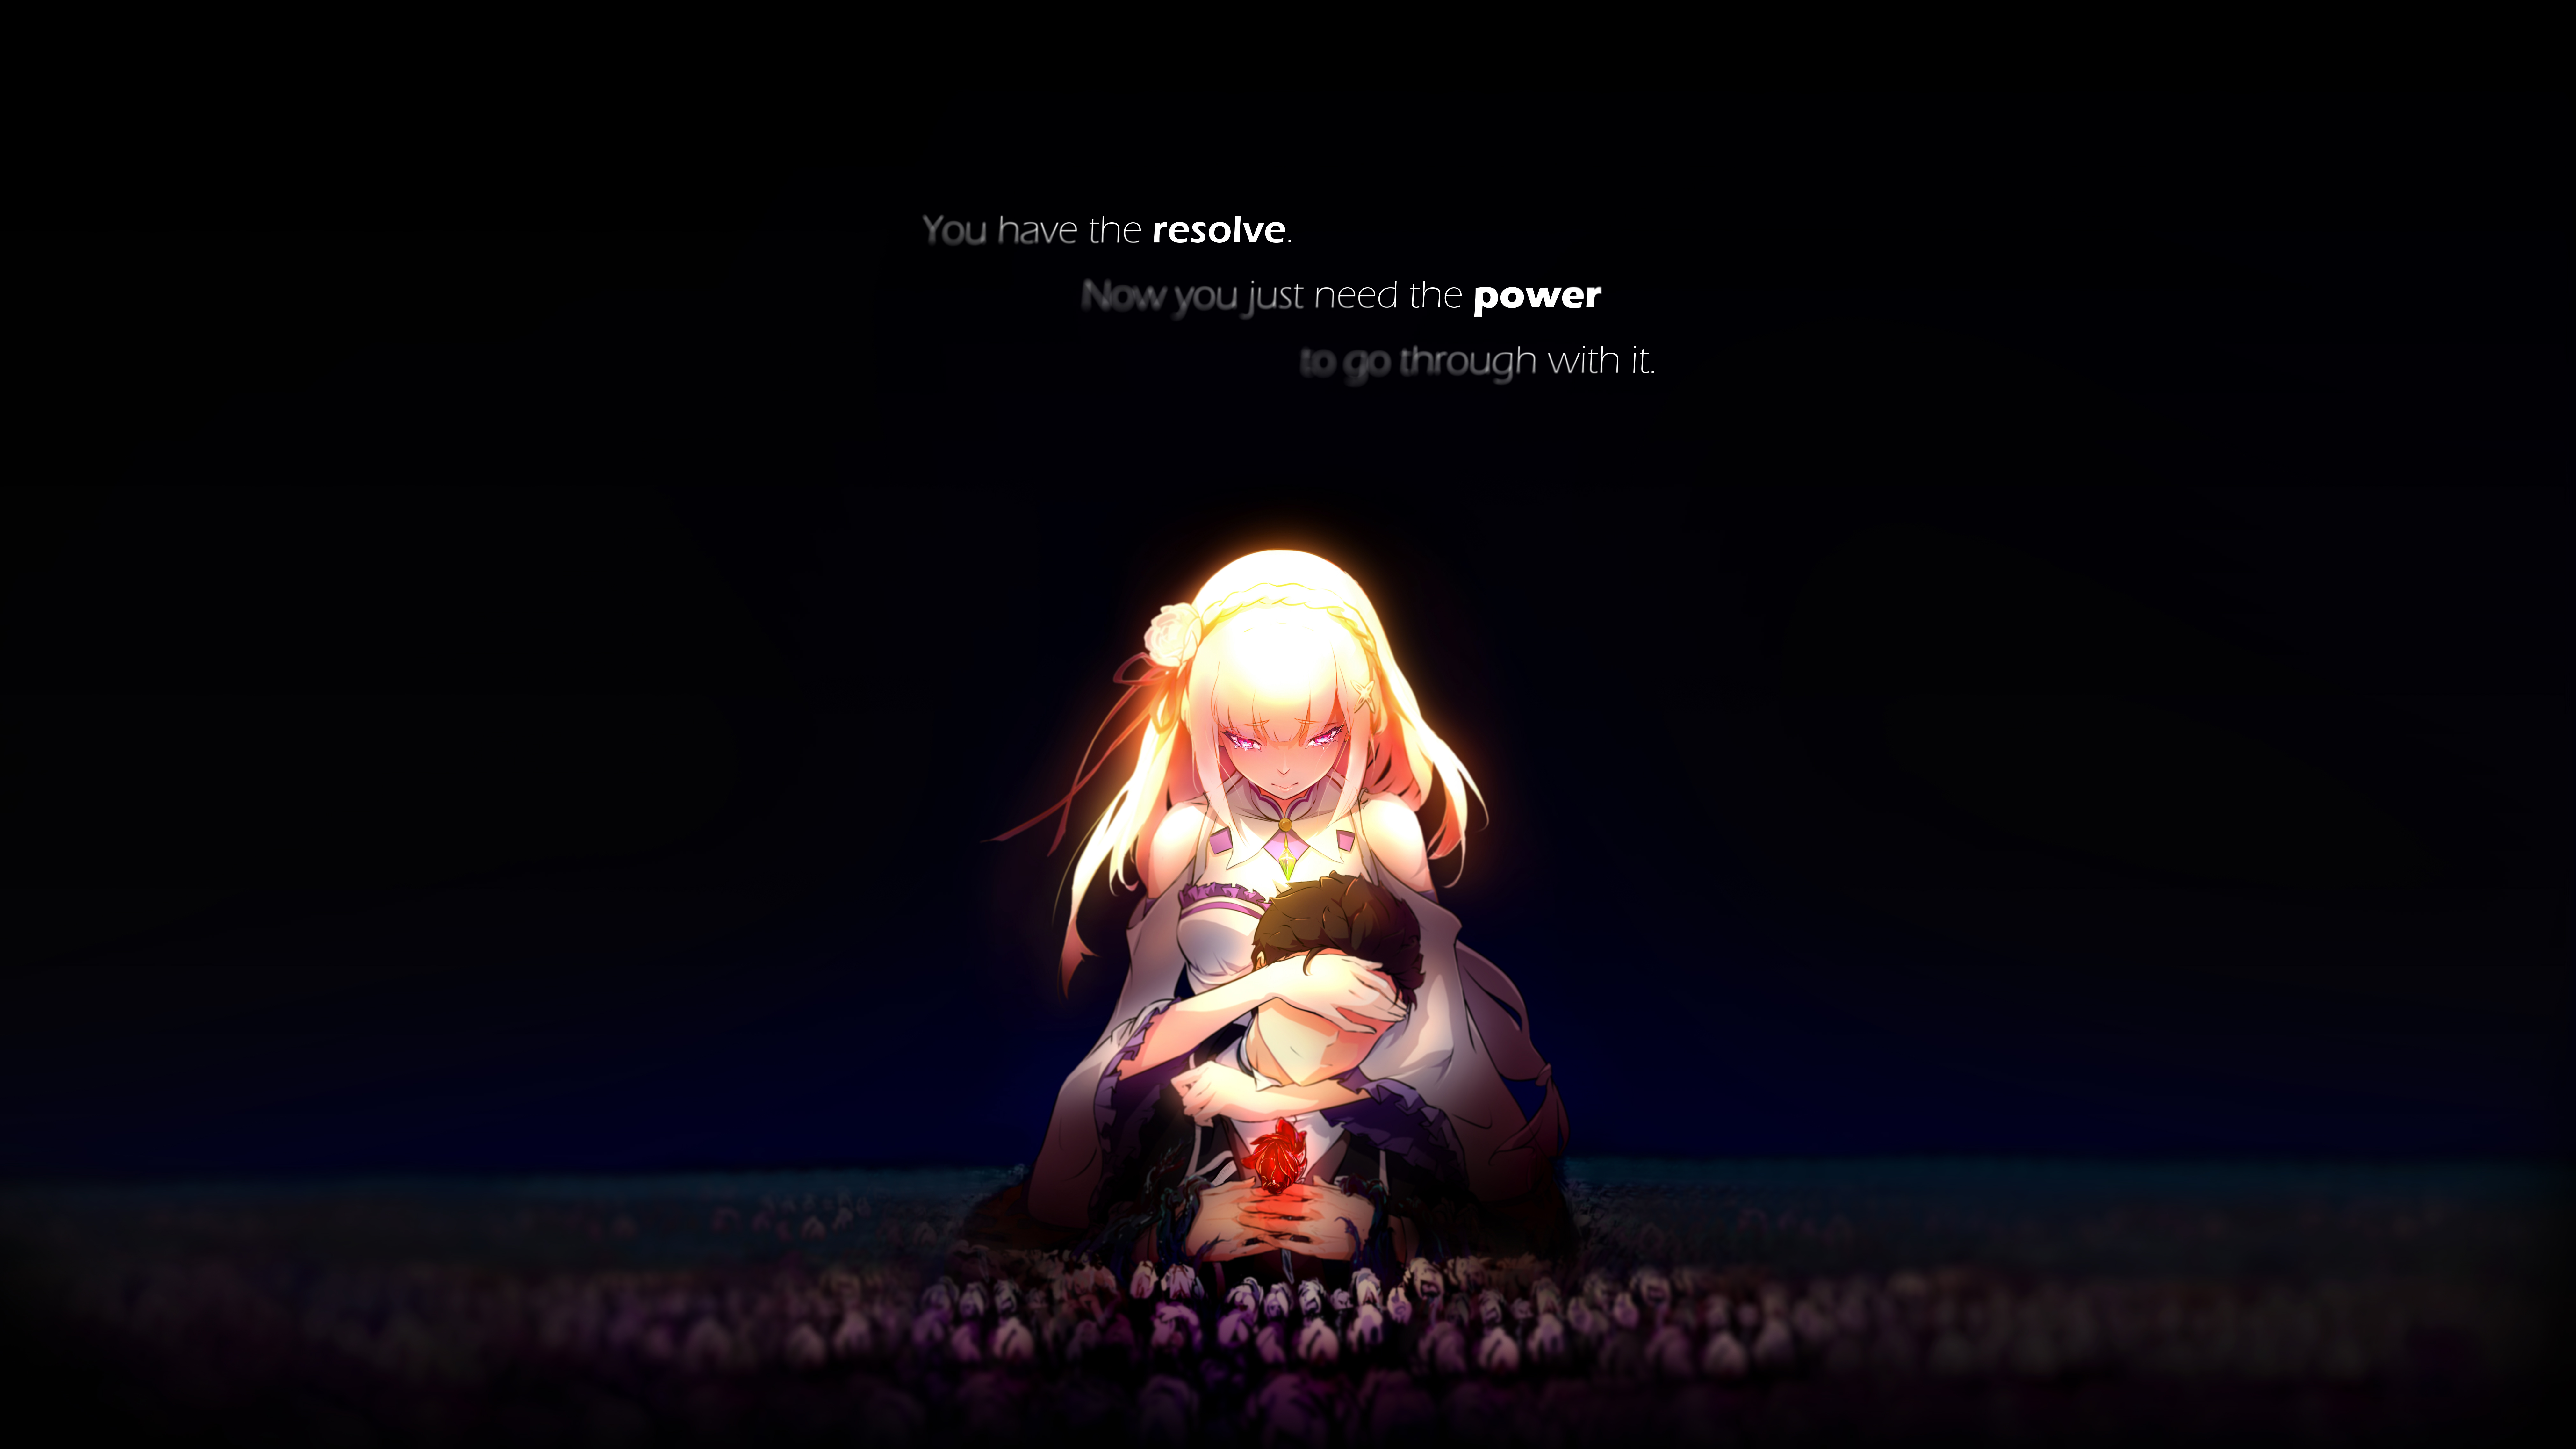 Descarga gratis la imagen Animado, Emilia (Re:zero), Re:zero Comenzando La Vida En Otro Mundo, Subaru Natsuki en el escritorio de tu PC